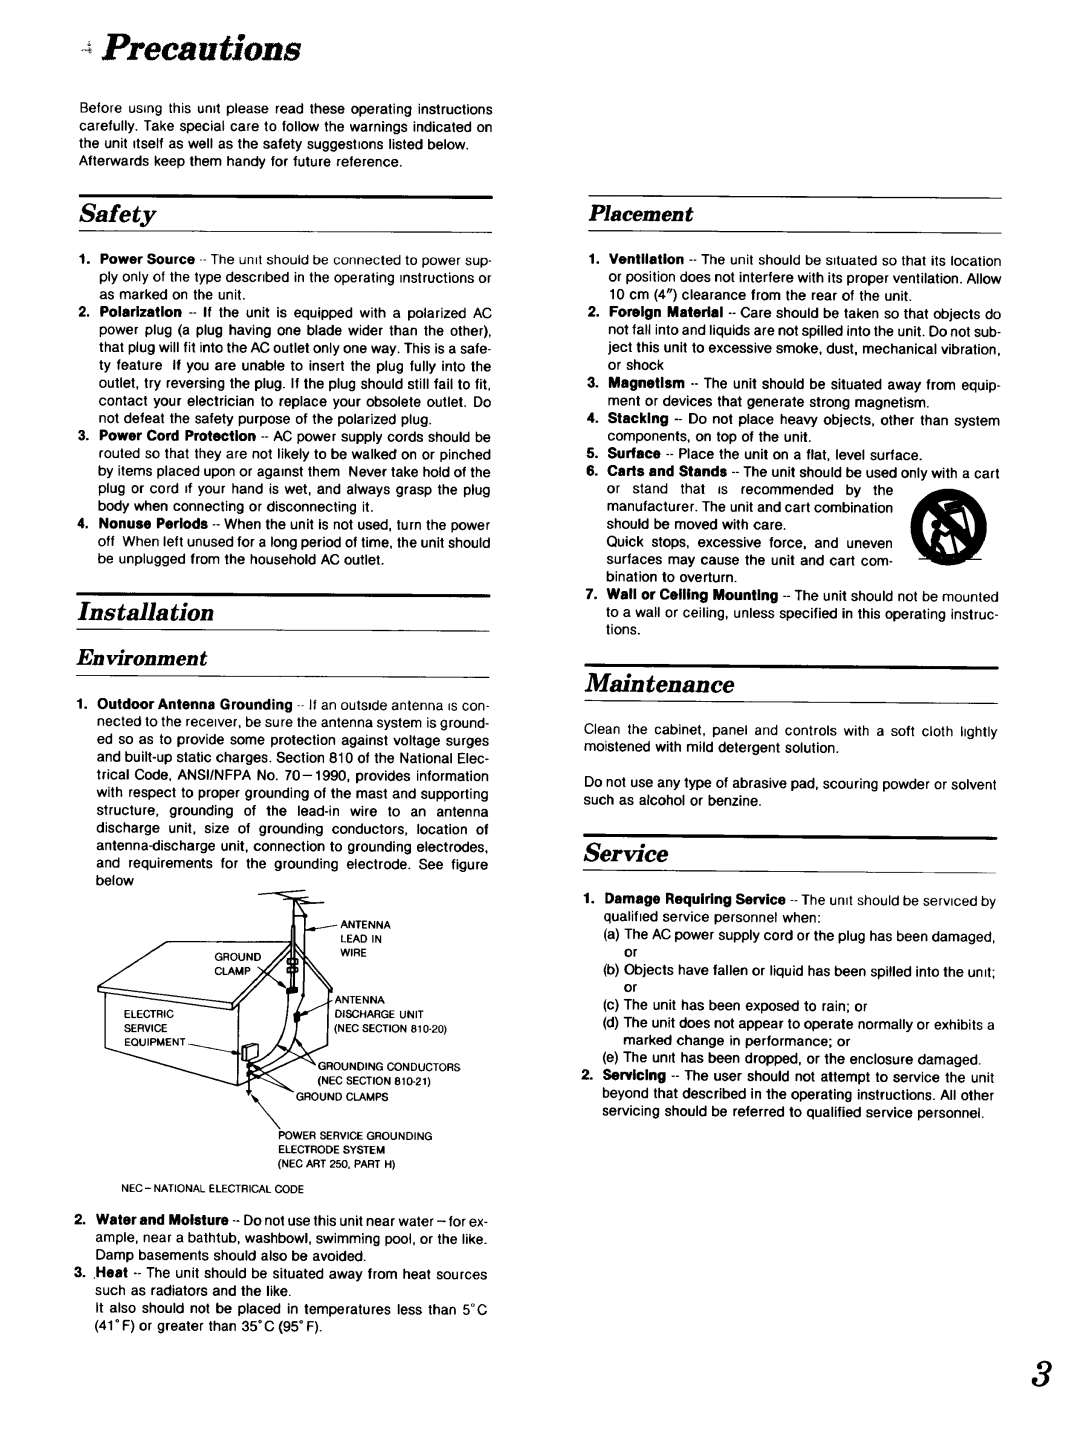 Technics SA-GX 19O manual Precautions, Maintenance, Installation, Service, Placement, Environment, Safety 